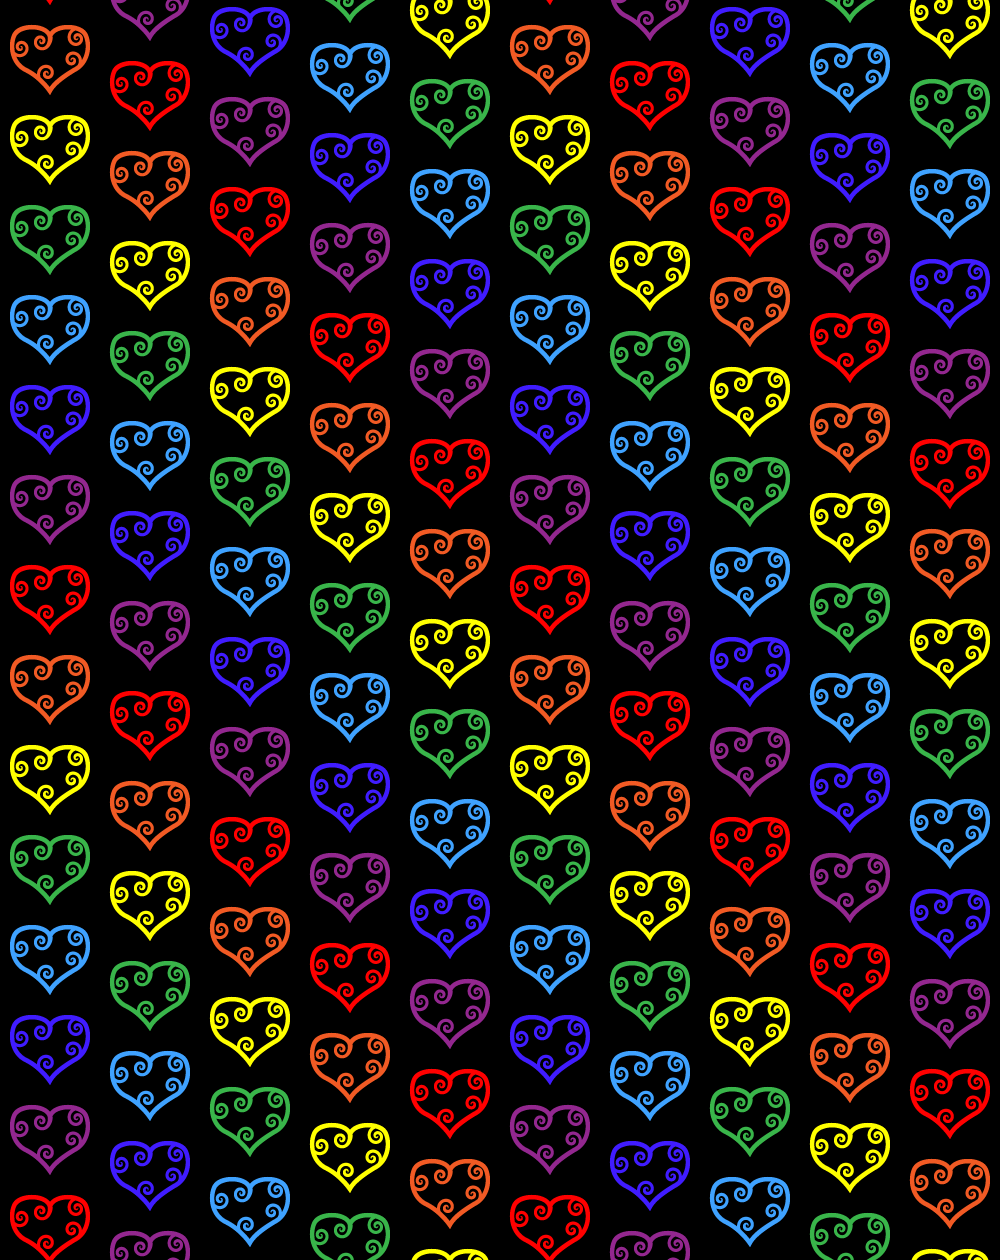 Rainbow Hearts Wallpaper